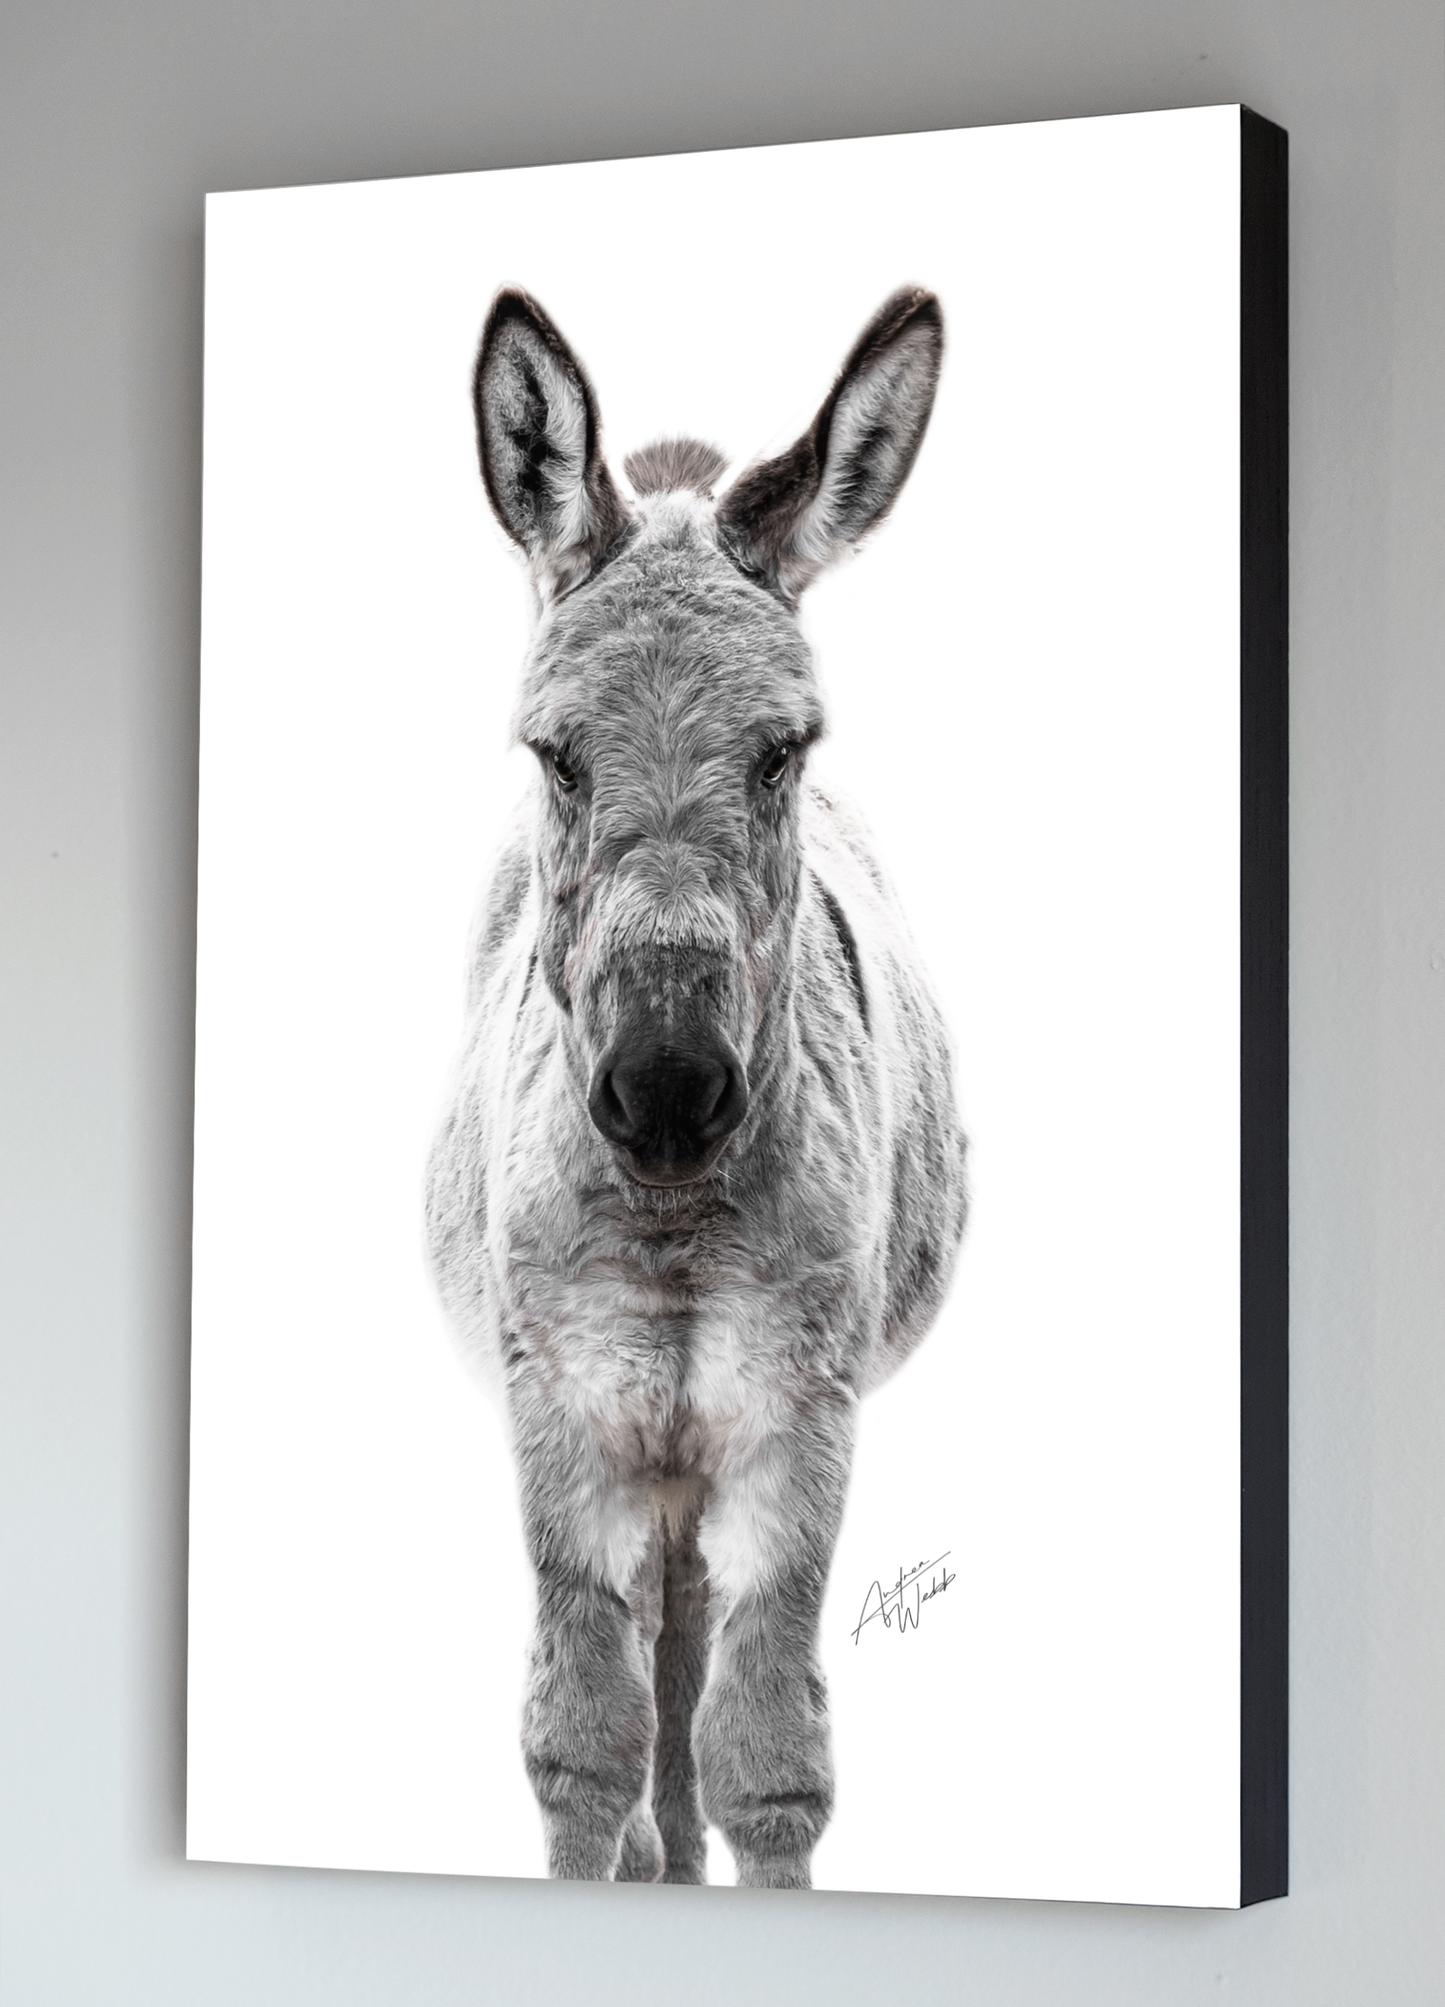 Donkey art, baby donkey artwork, donkey fine art, donkey on white background, donkey prints and canvases. Donkey art. Donkey wall art. Donkey portrait. Donkey canvas. Animal Photography. Donkey gifts